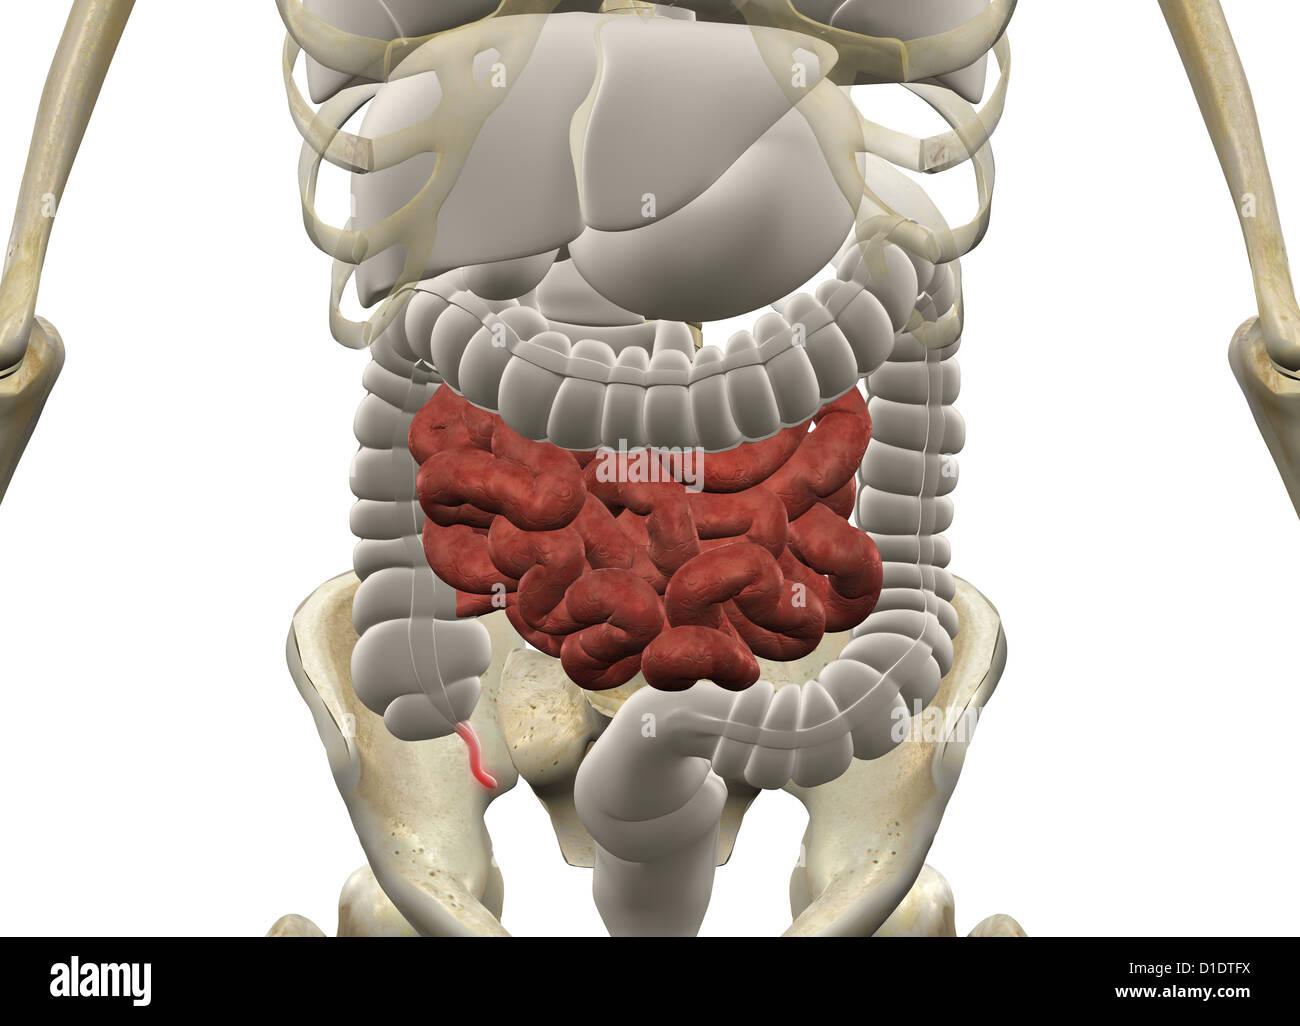 Human anatomy showing organ systems Stock Photo